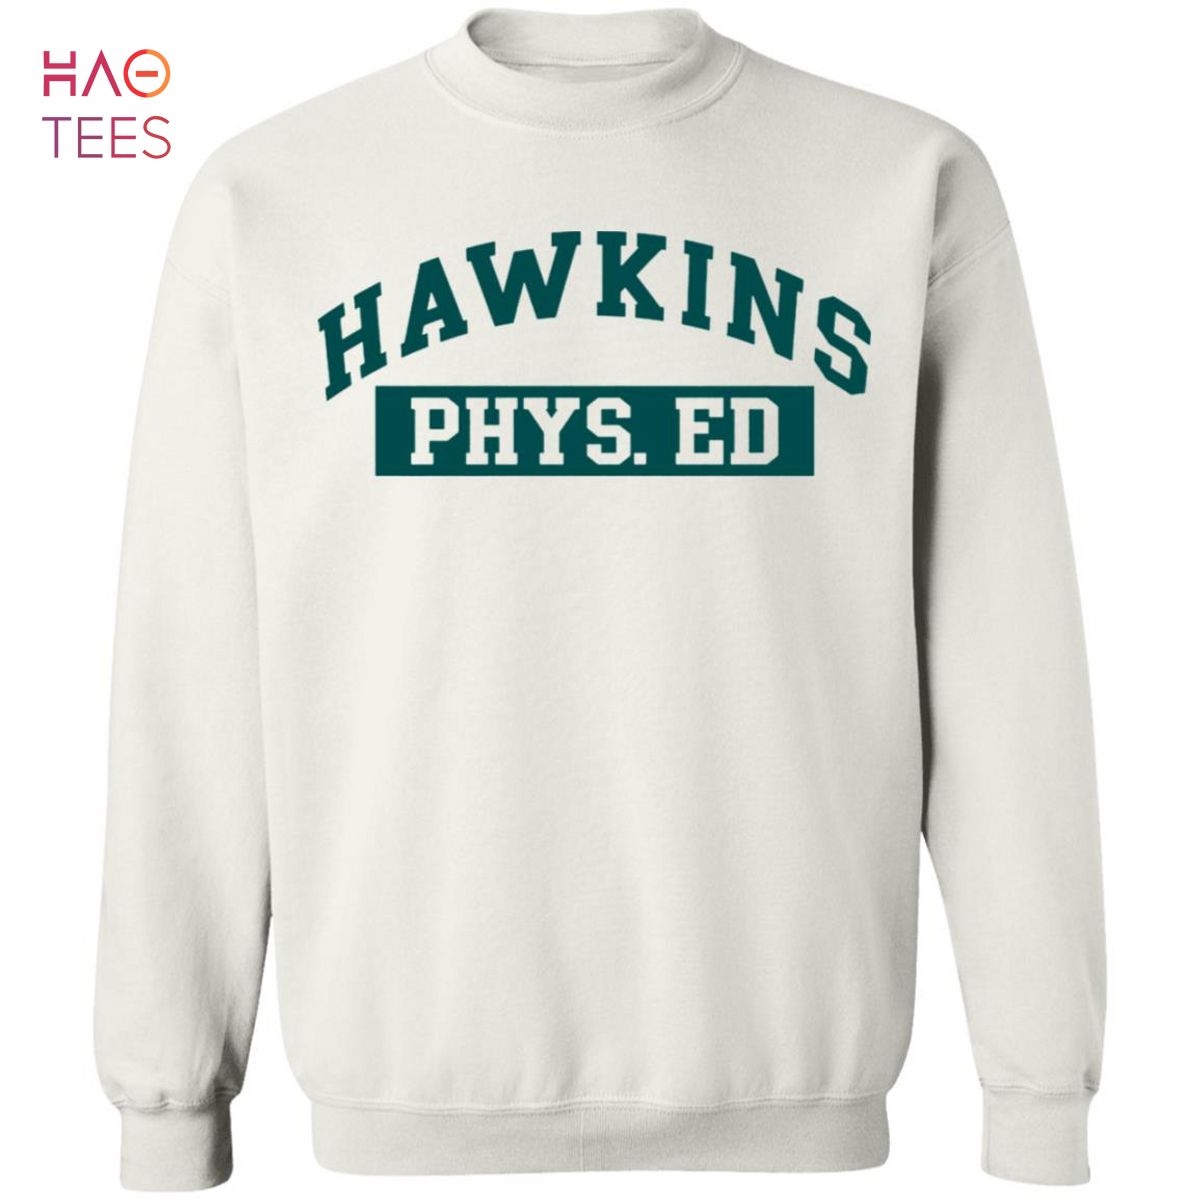 [NEW] Hawkins Phys Ed Sweater